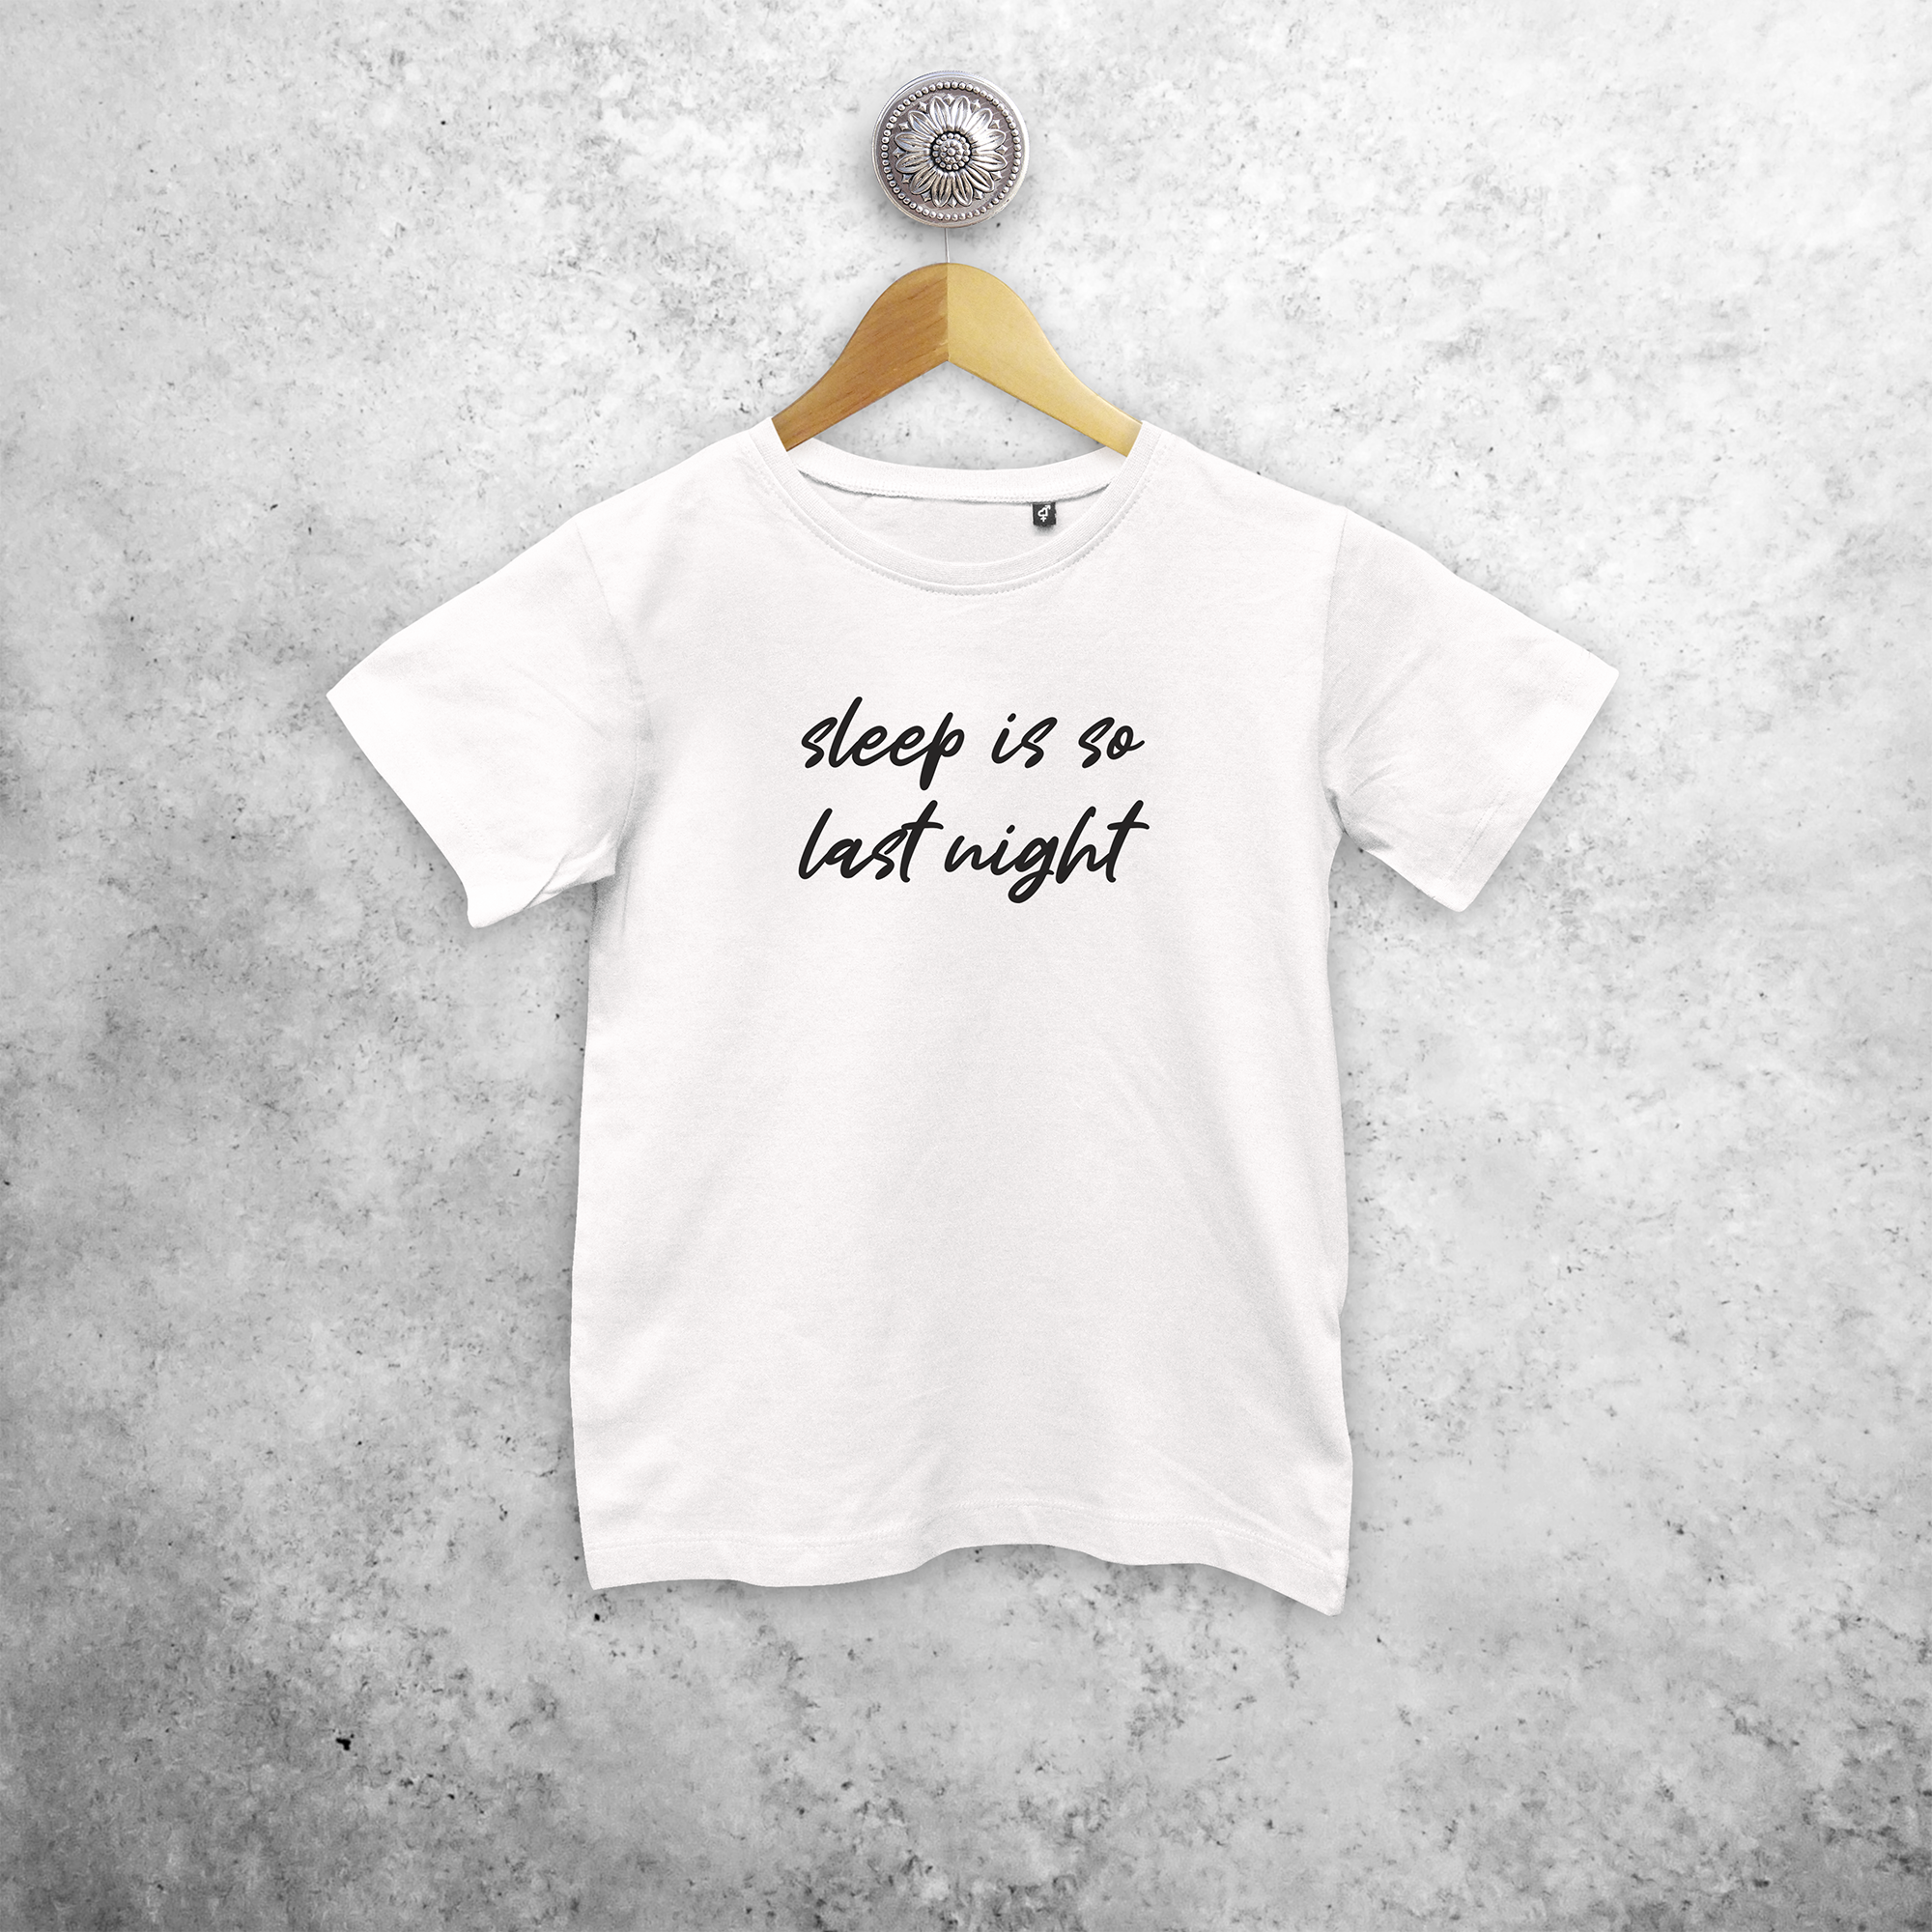 'Sleep is so last night' kids shortsleeve shirt